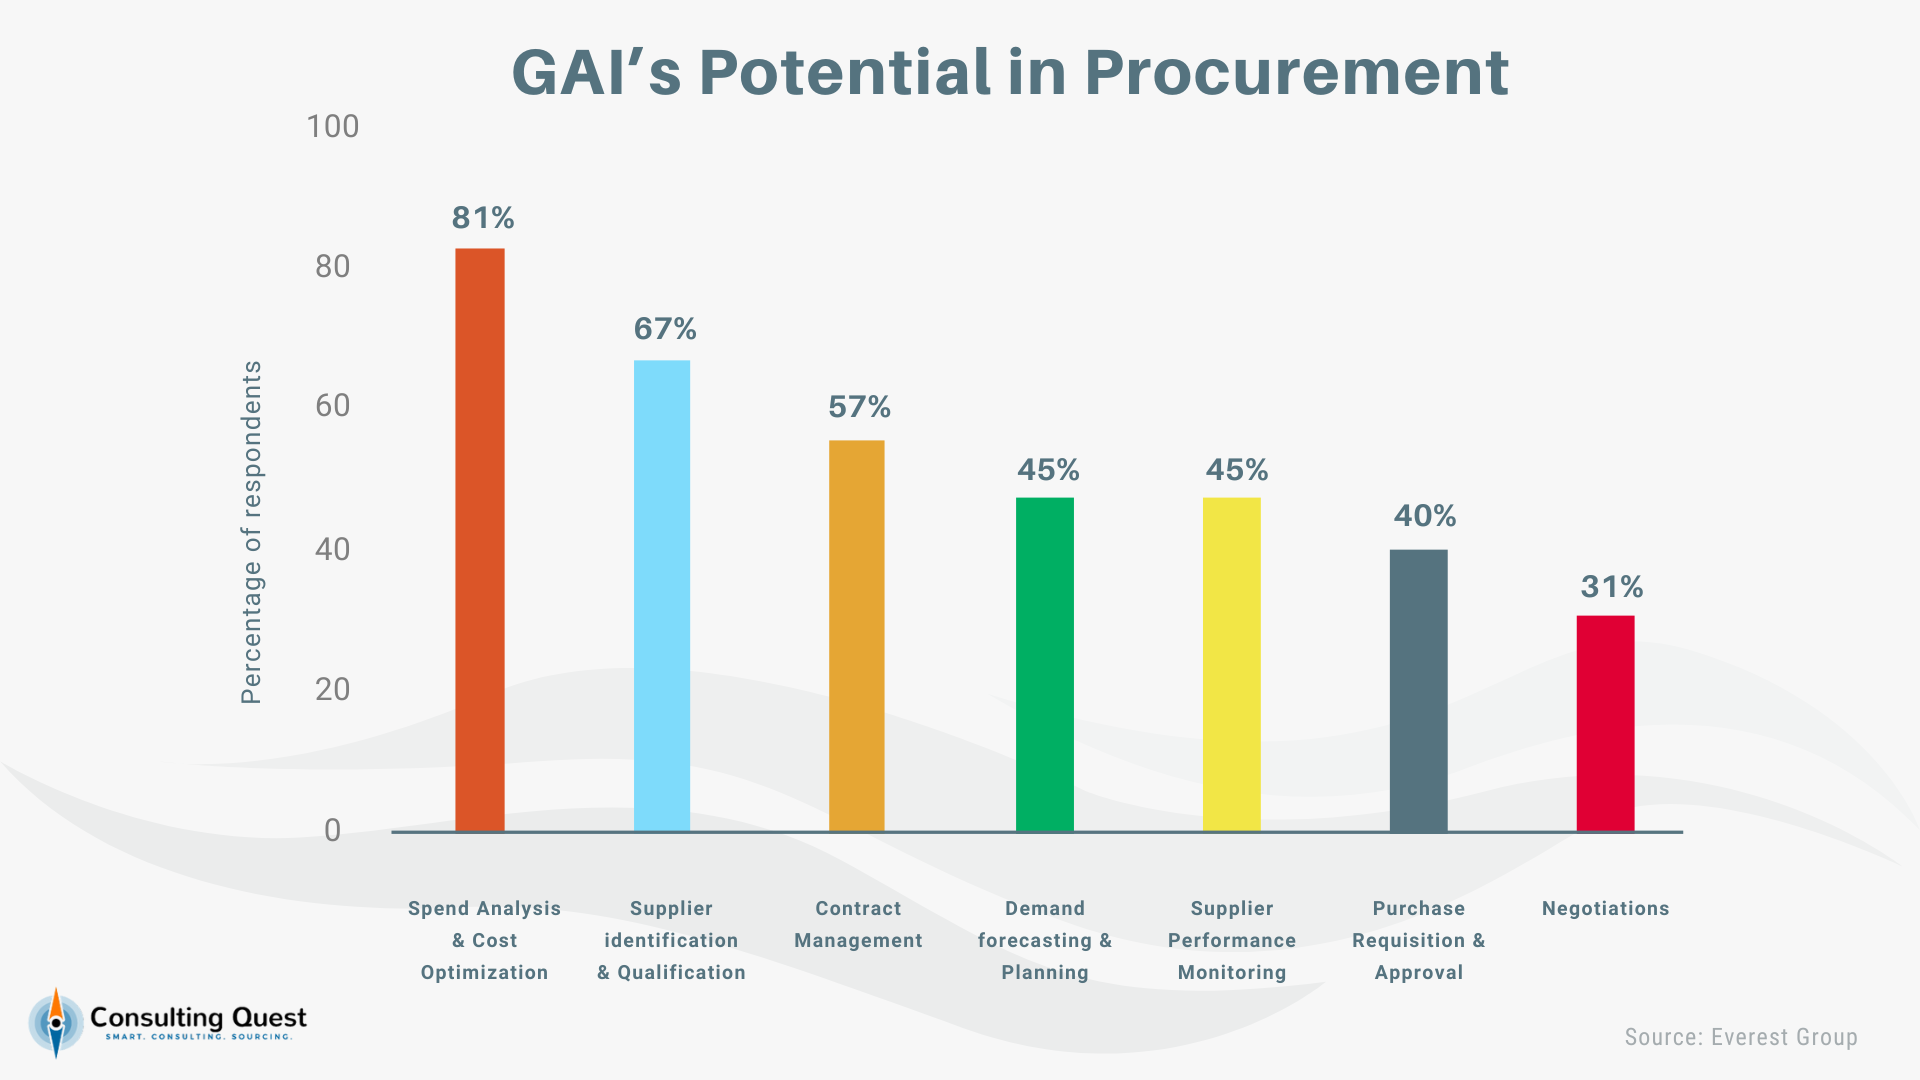 GAI’s potential in procurement